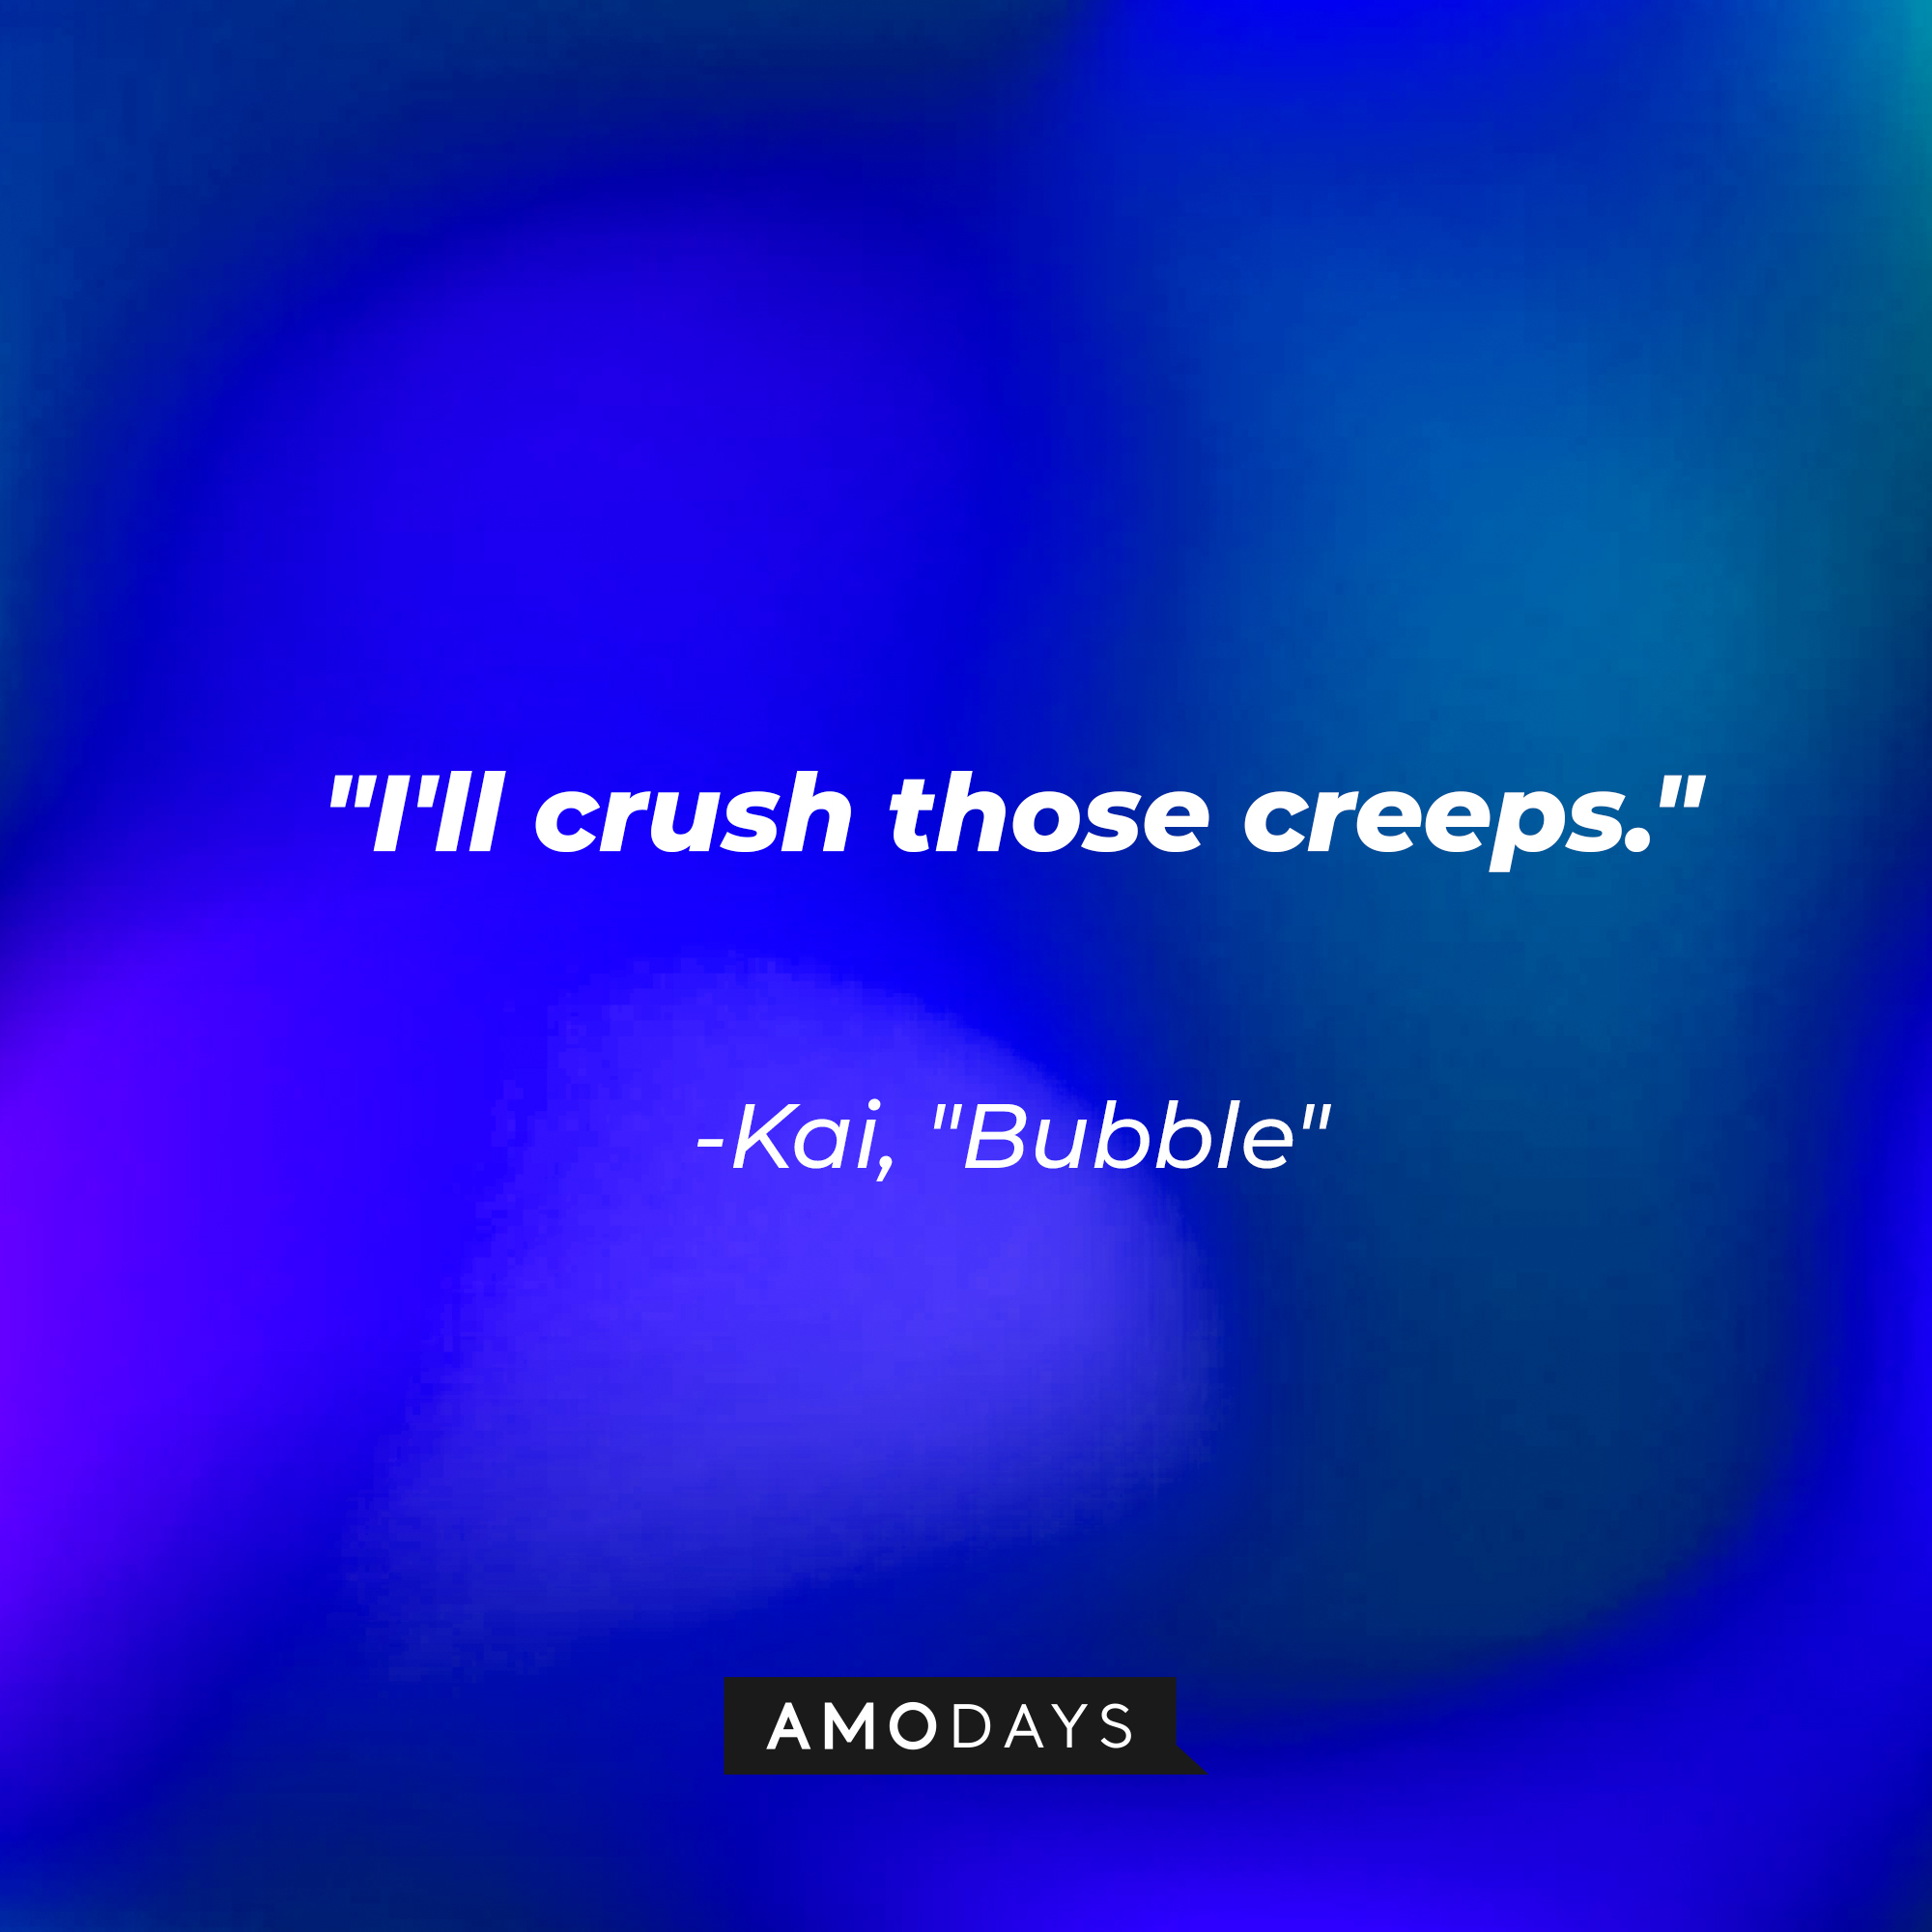 Kai's quote on "Bubble:" "I'll crush those creeps." | Source: AmoDays